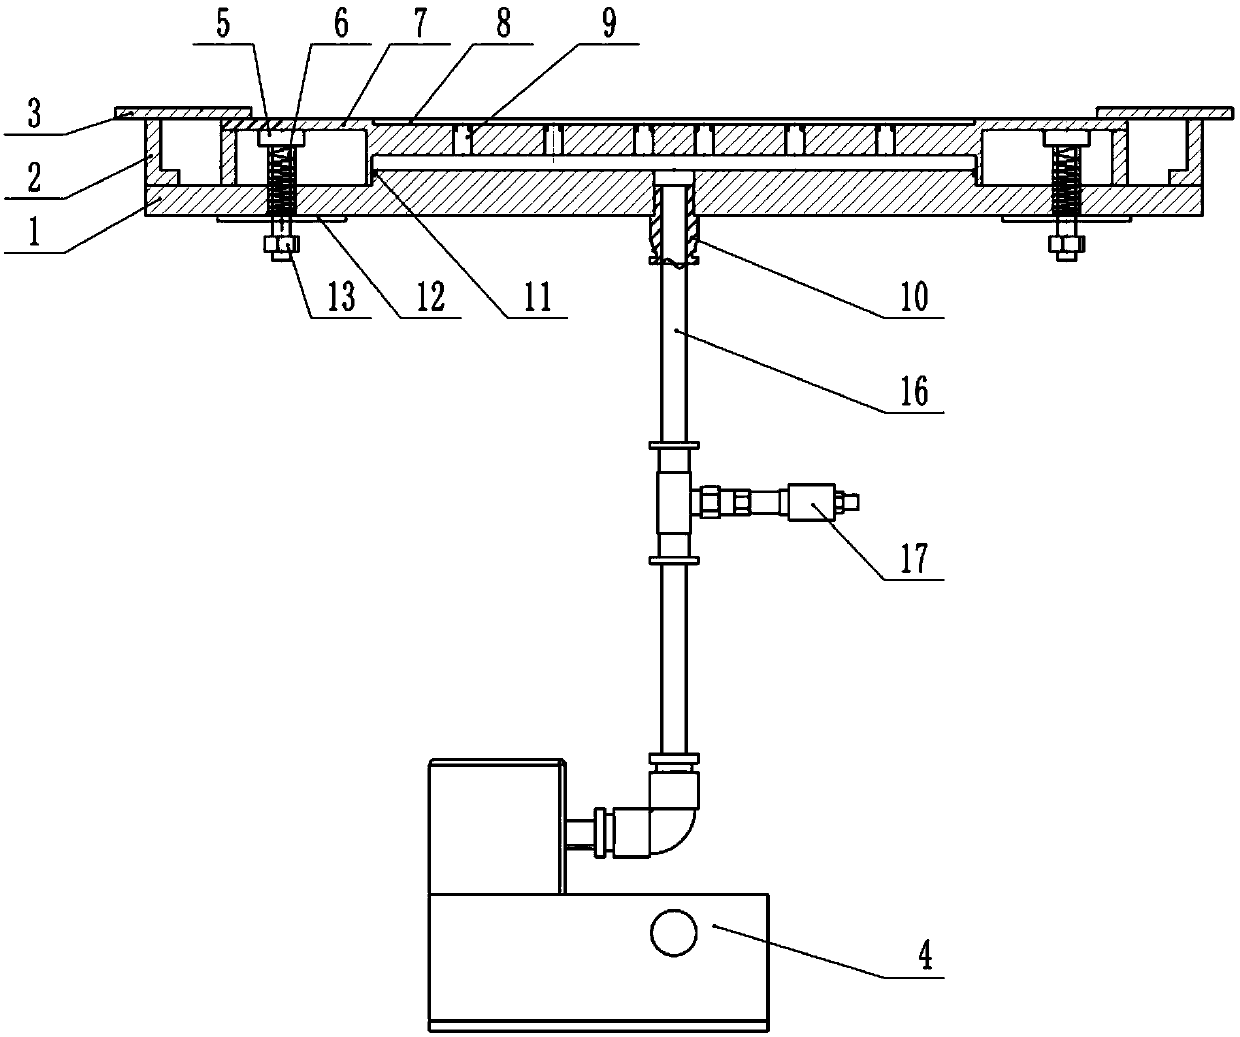 A vacuum fixture automatic adjustment device for polishing workpiece